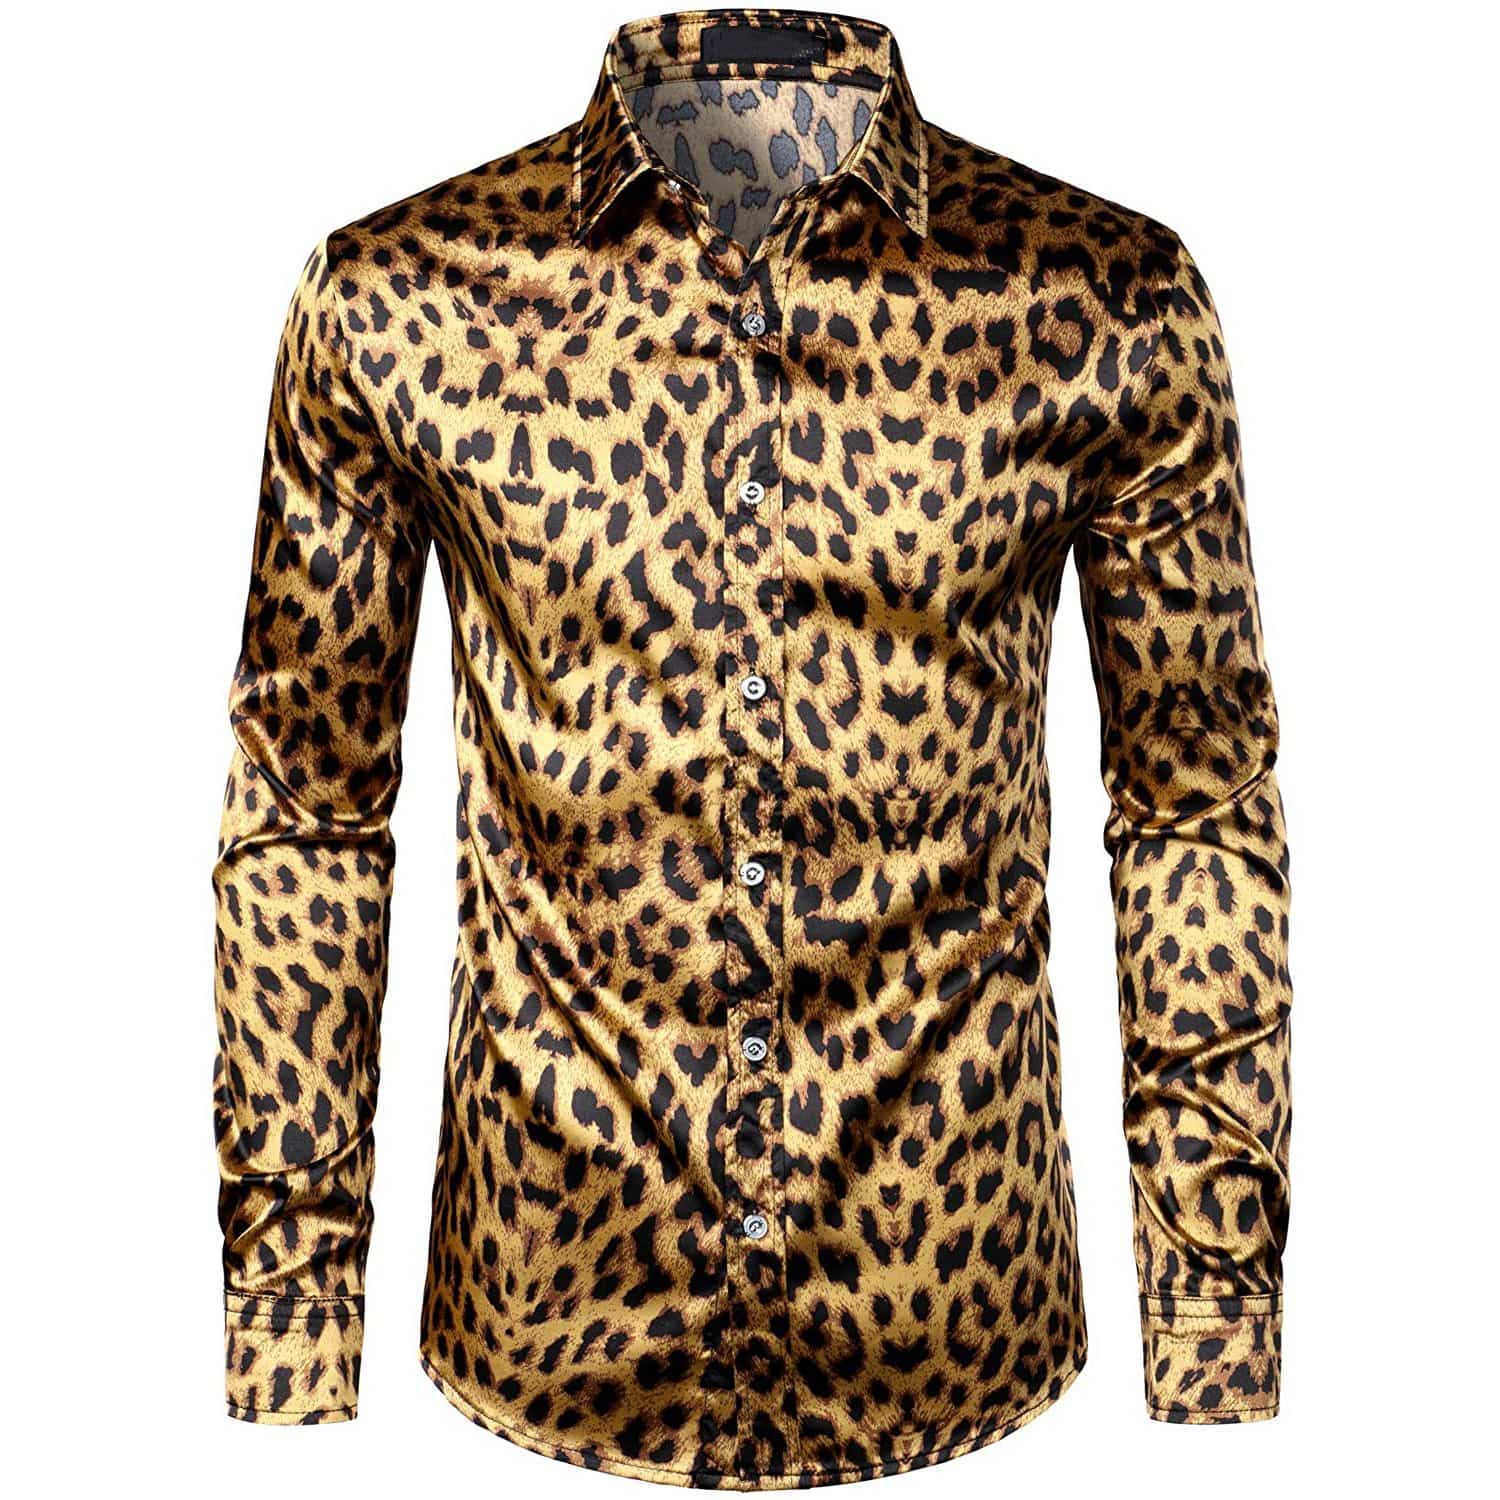 Womens Green Leopard Animal Print Soft Feel T-Shirt Tee Shirt Top L 